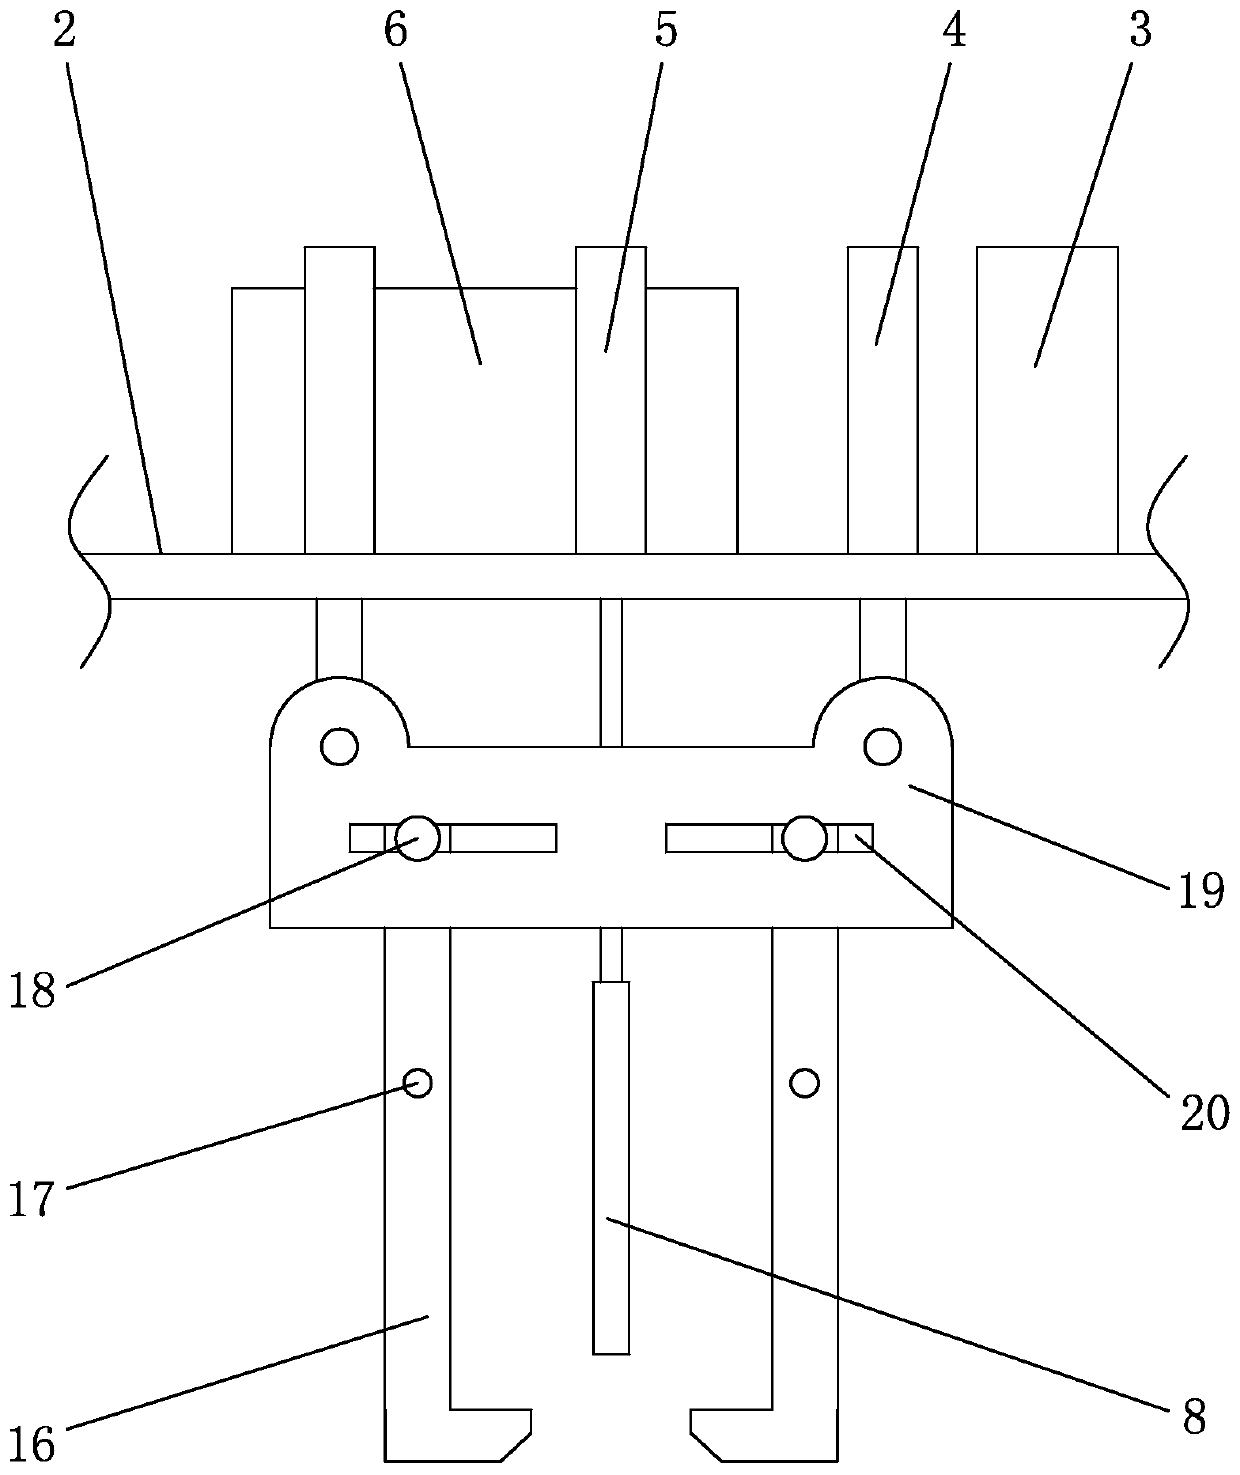 Box type column assembling machine